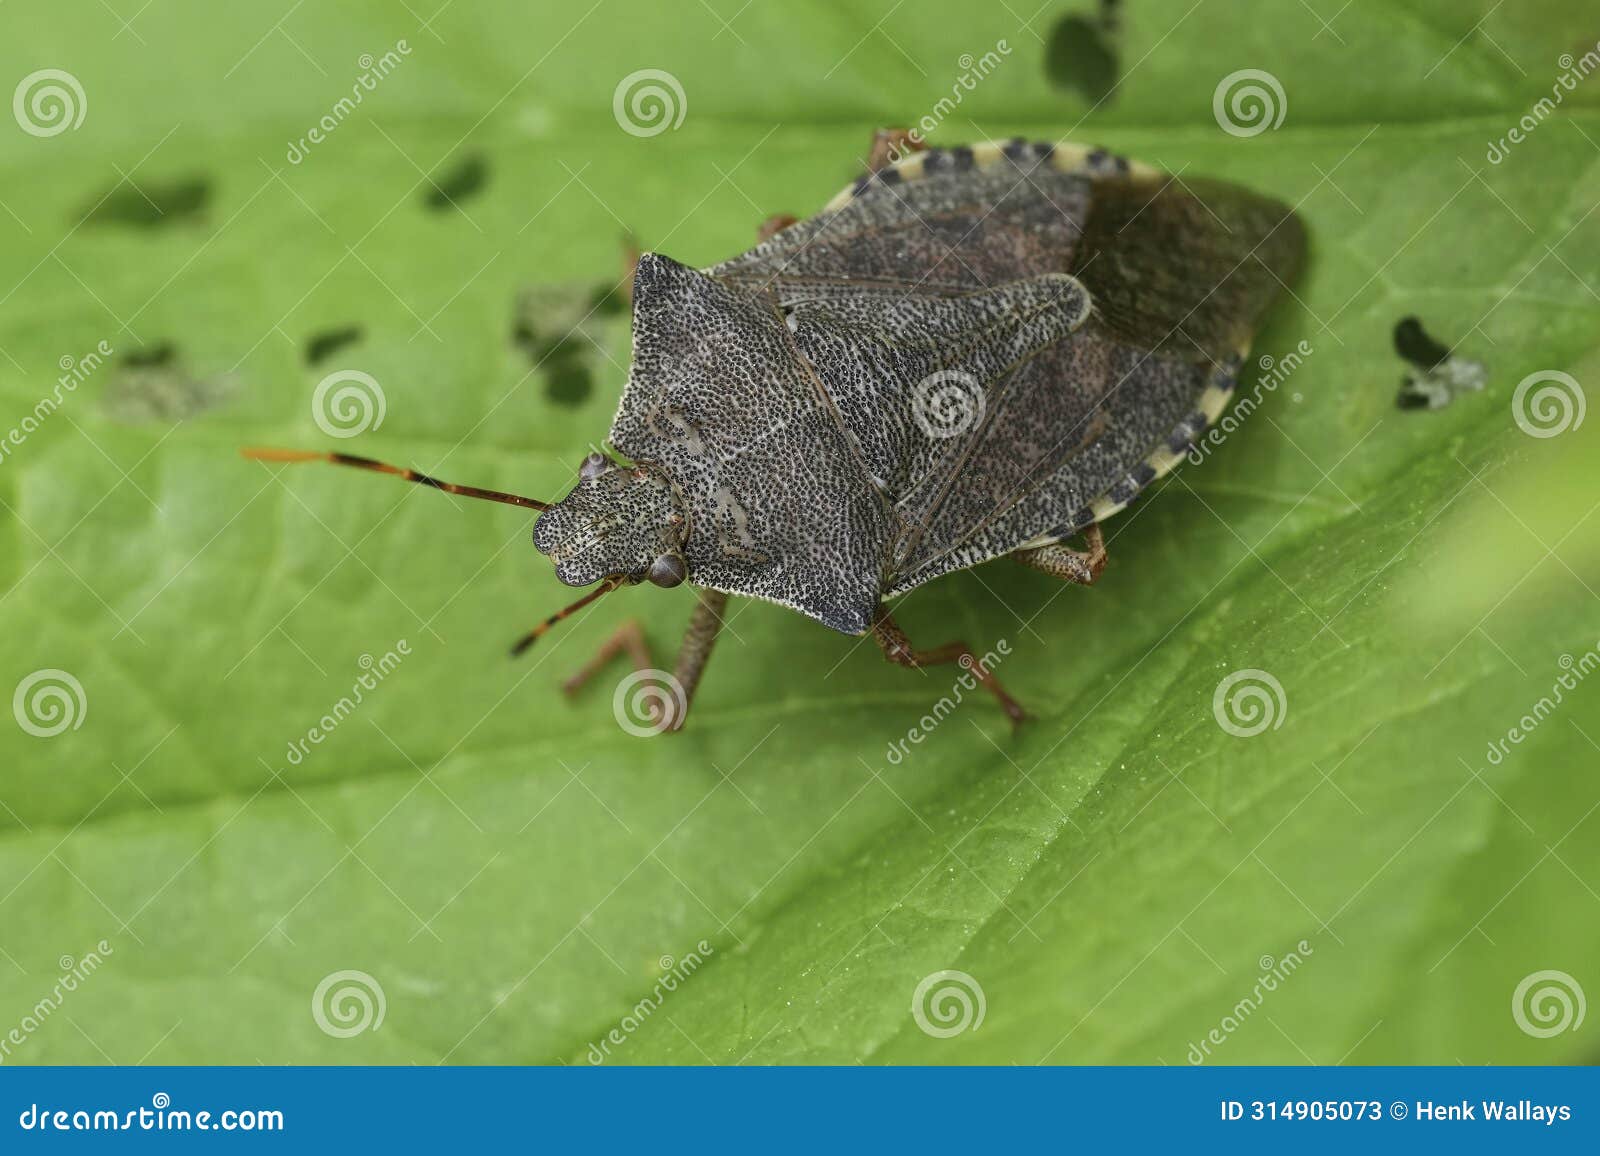 closeup on the brown colored dock leaf bug, arma custos sitting on a green leaf